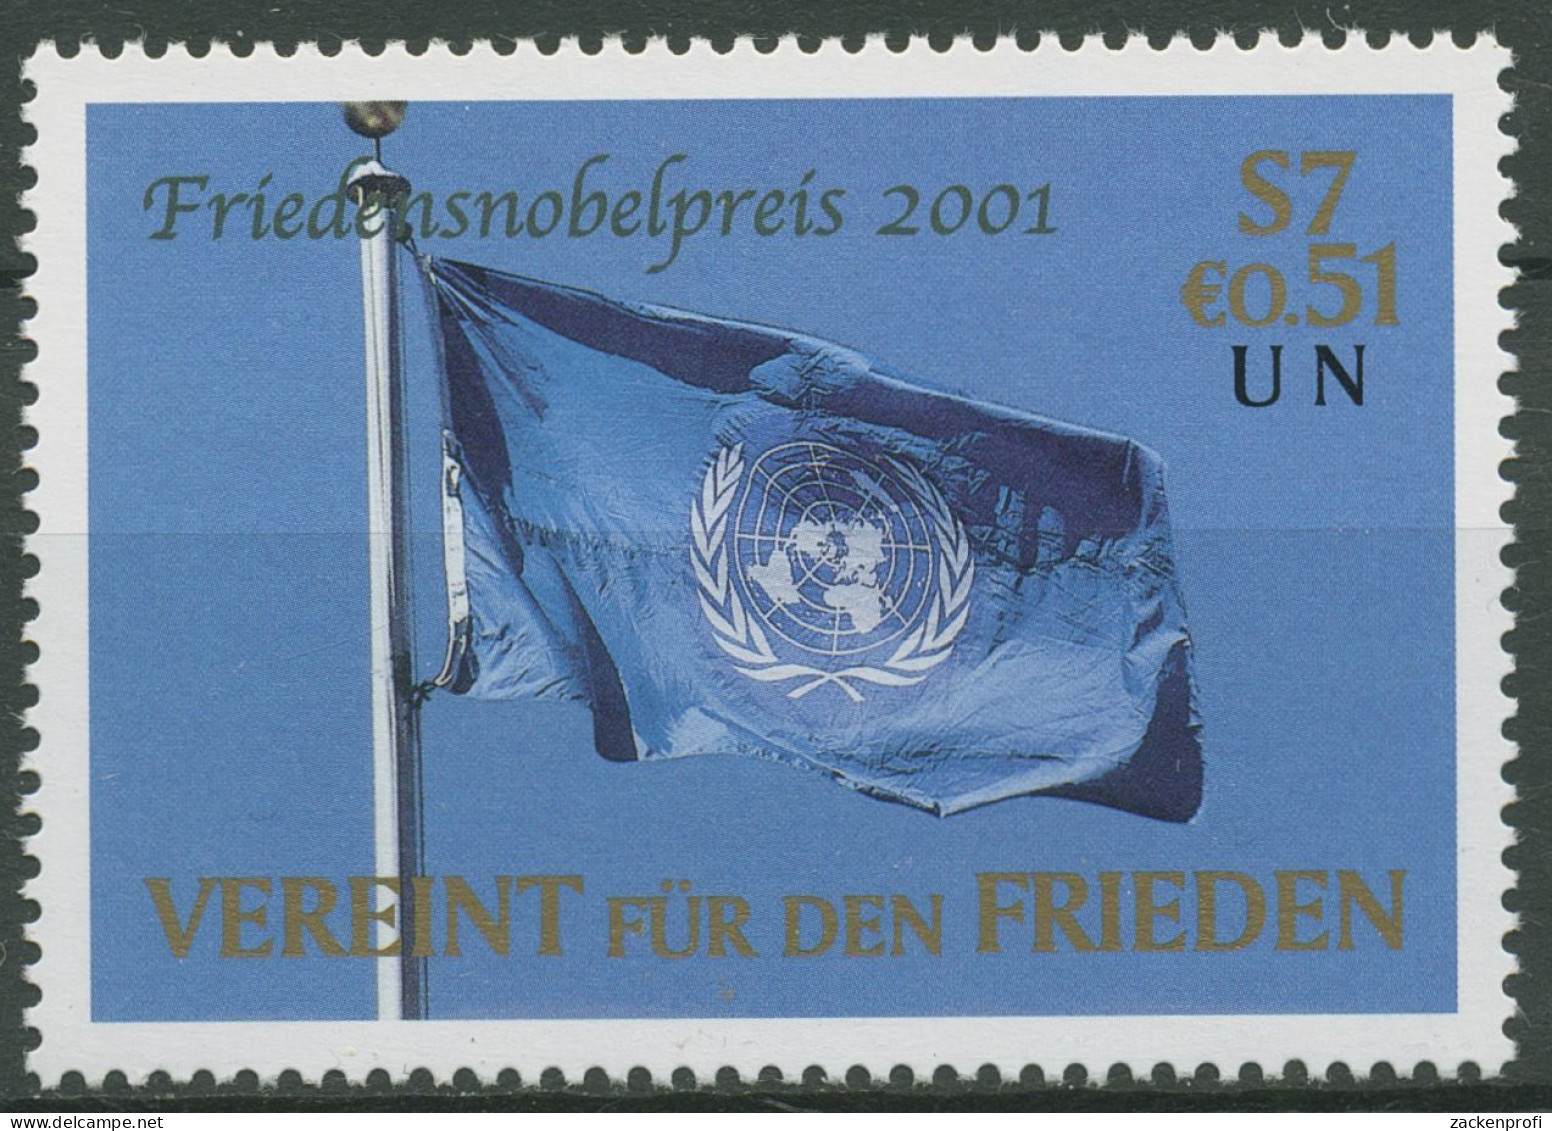 UNO Wien 2001 Friedensnobelpreis Kofi Annan Flagge 350 Postfrisch - Ongebruikt